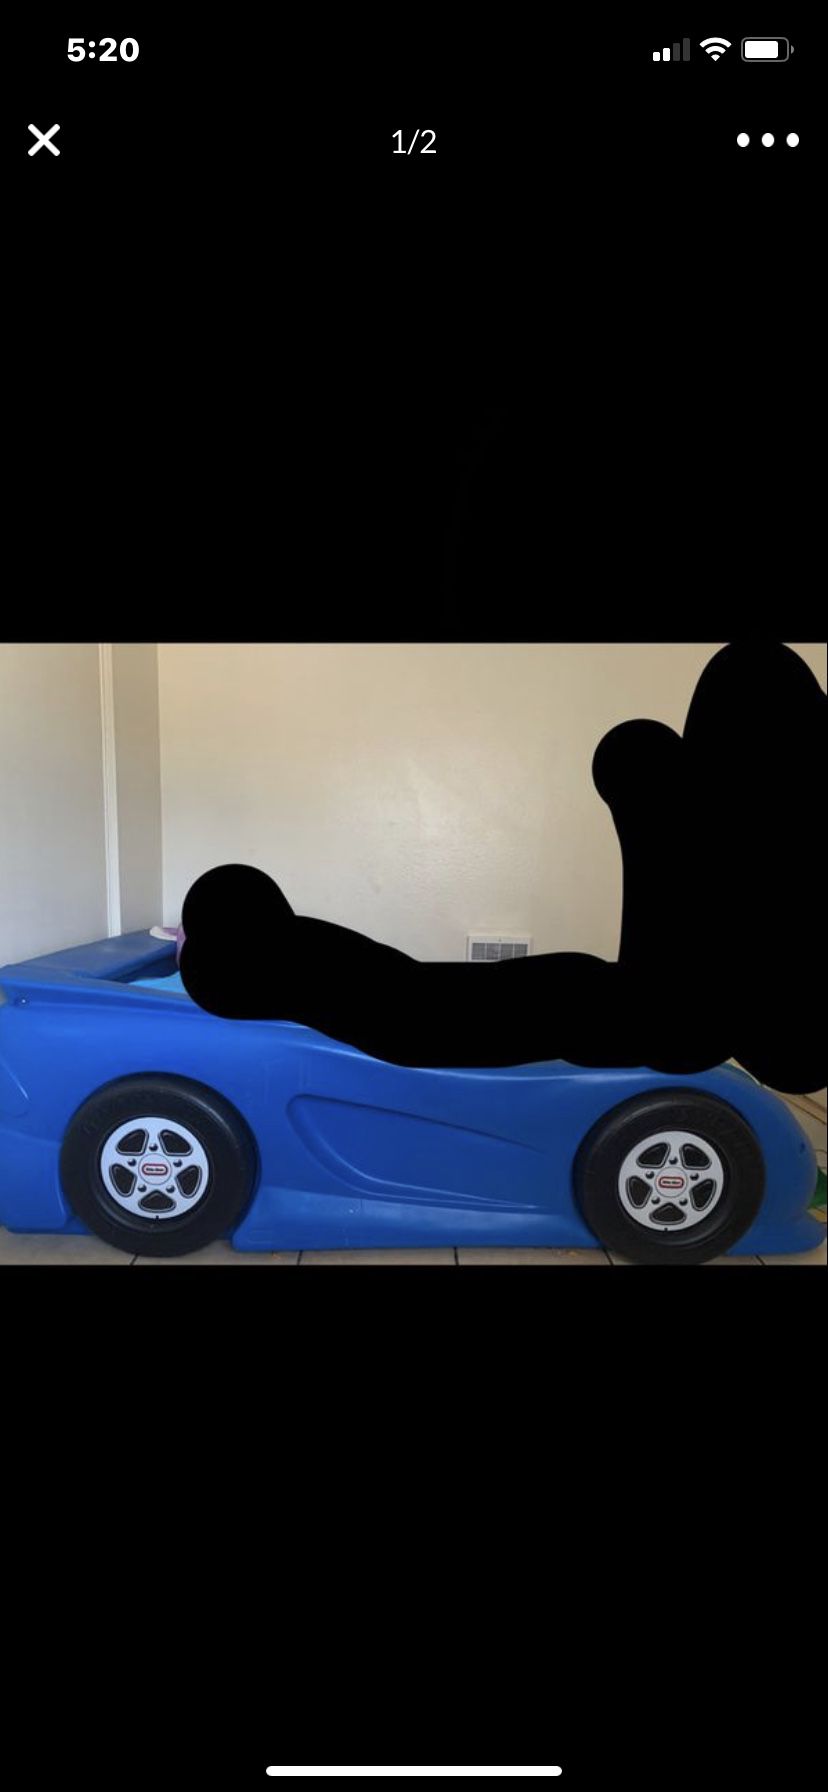 Blue car bed